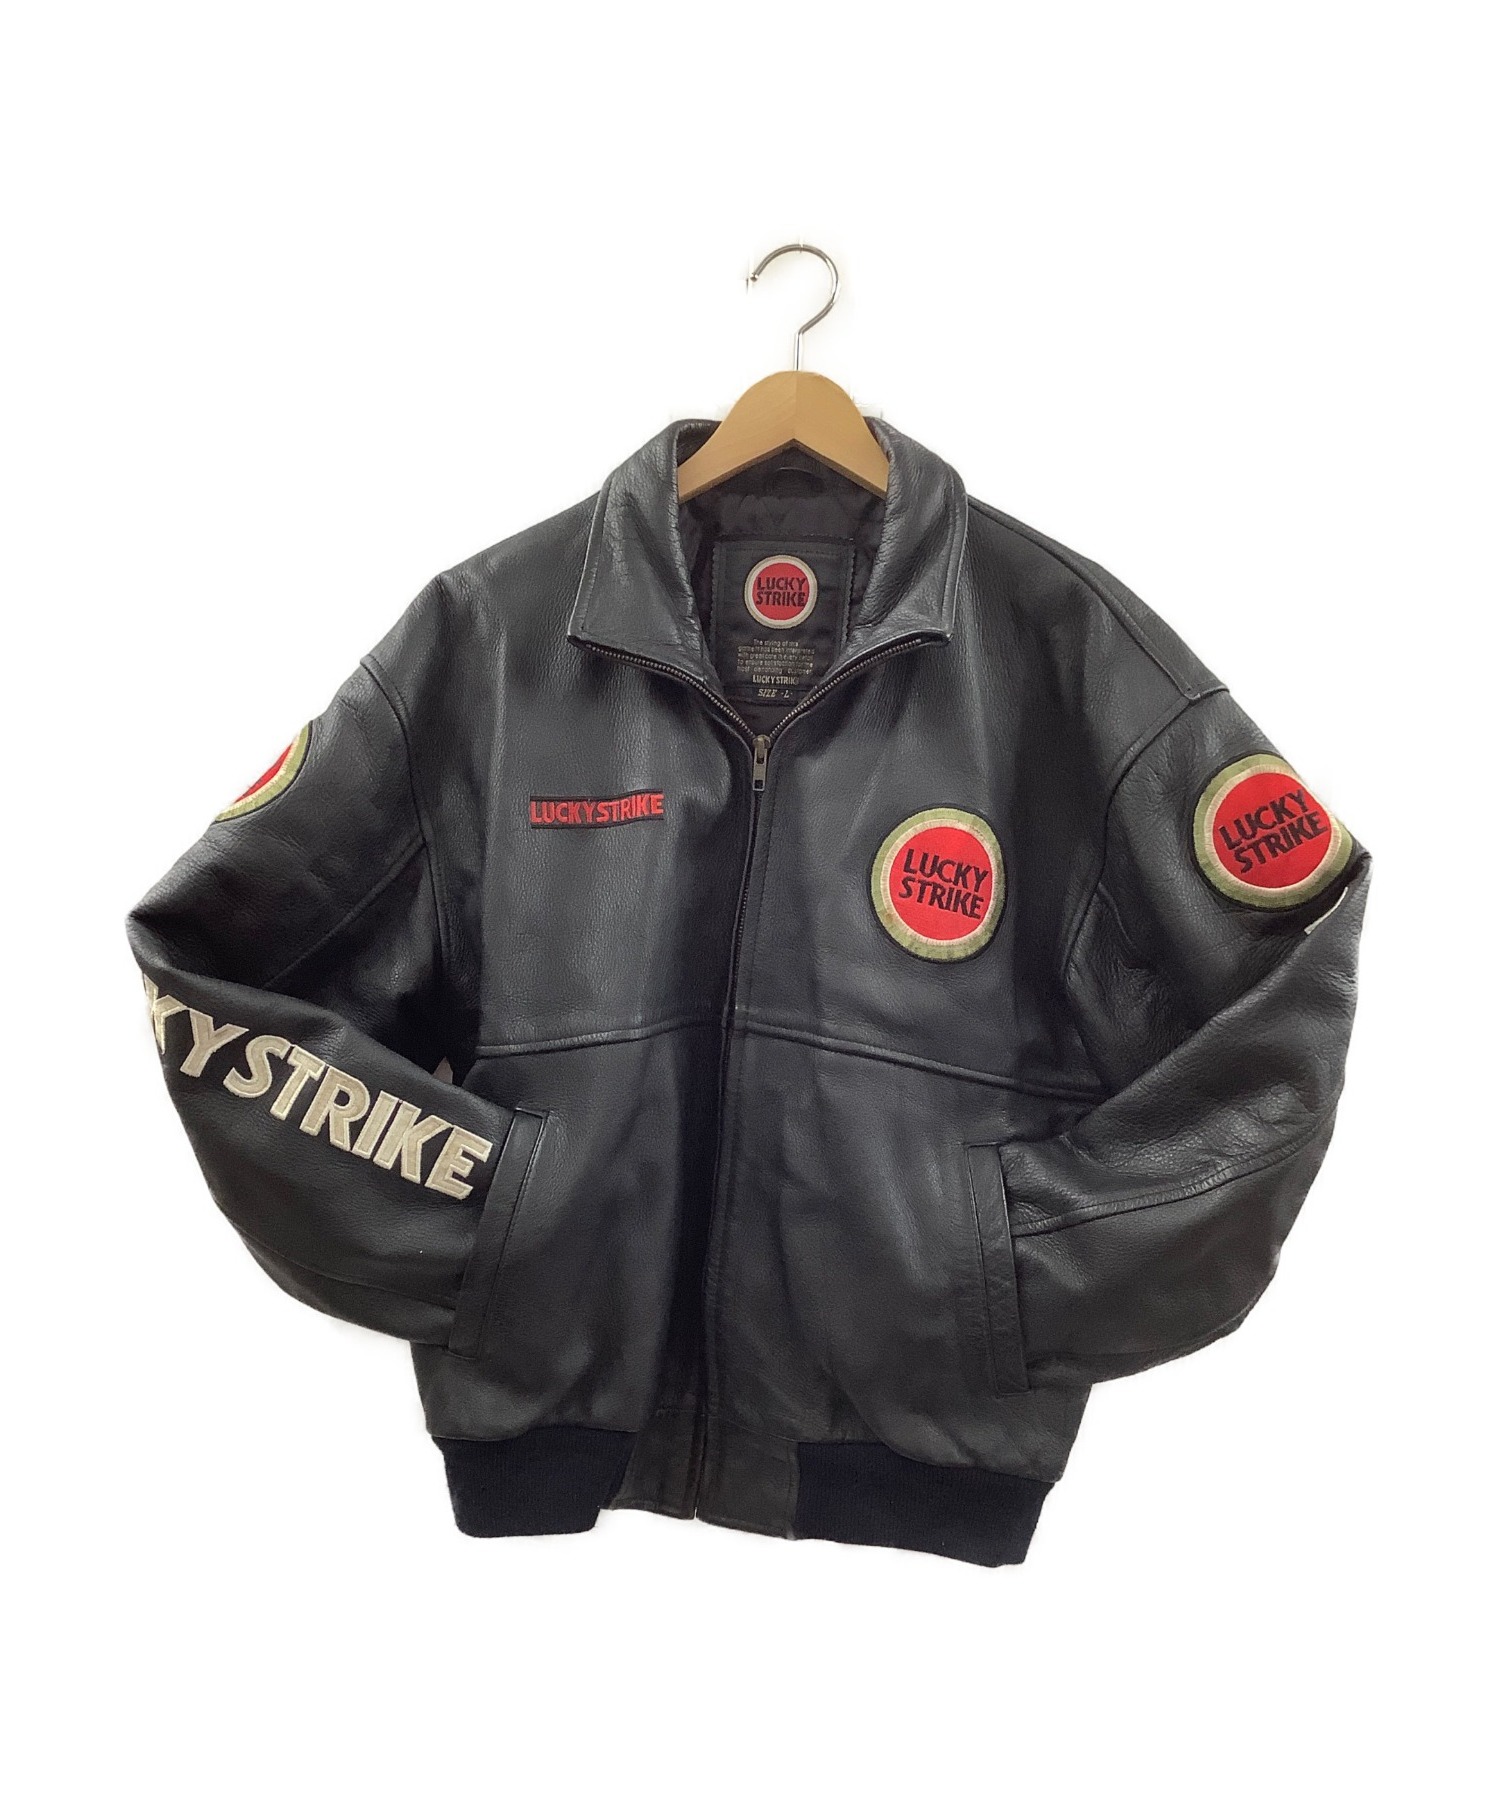 Lucky Strike Leather jacket 激レア-